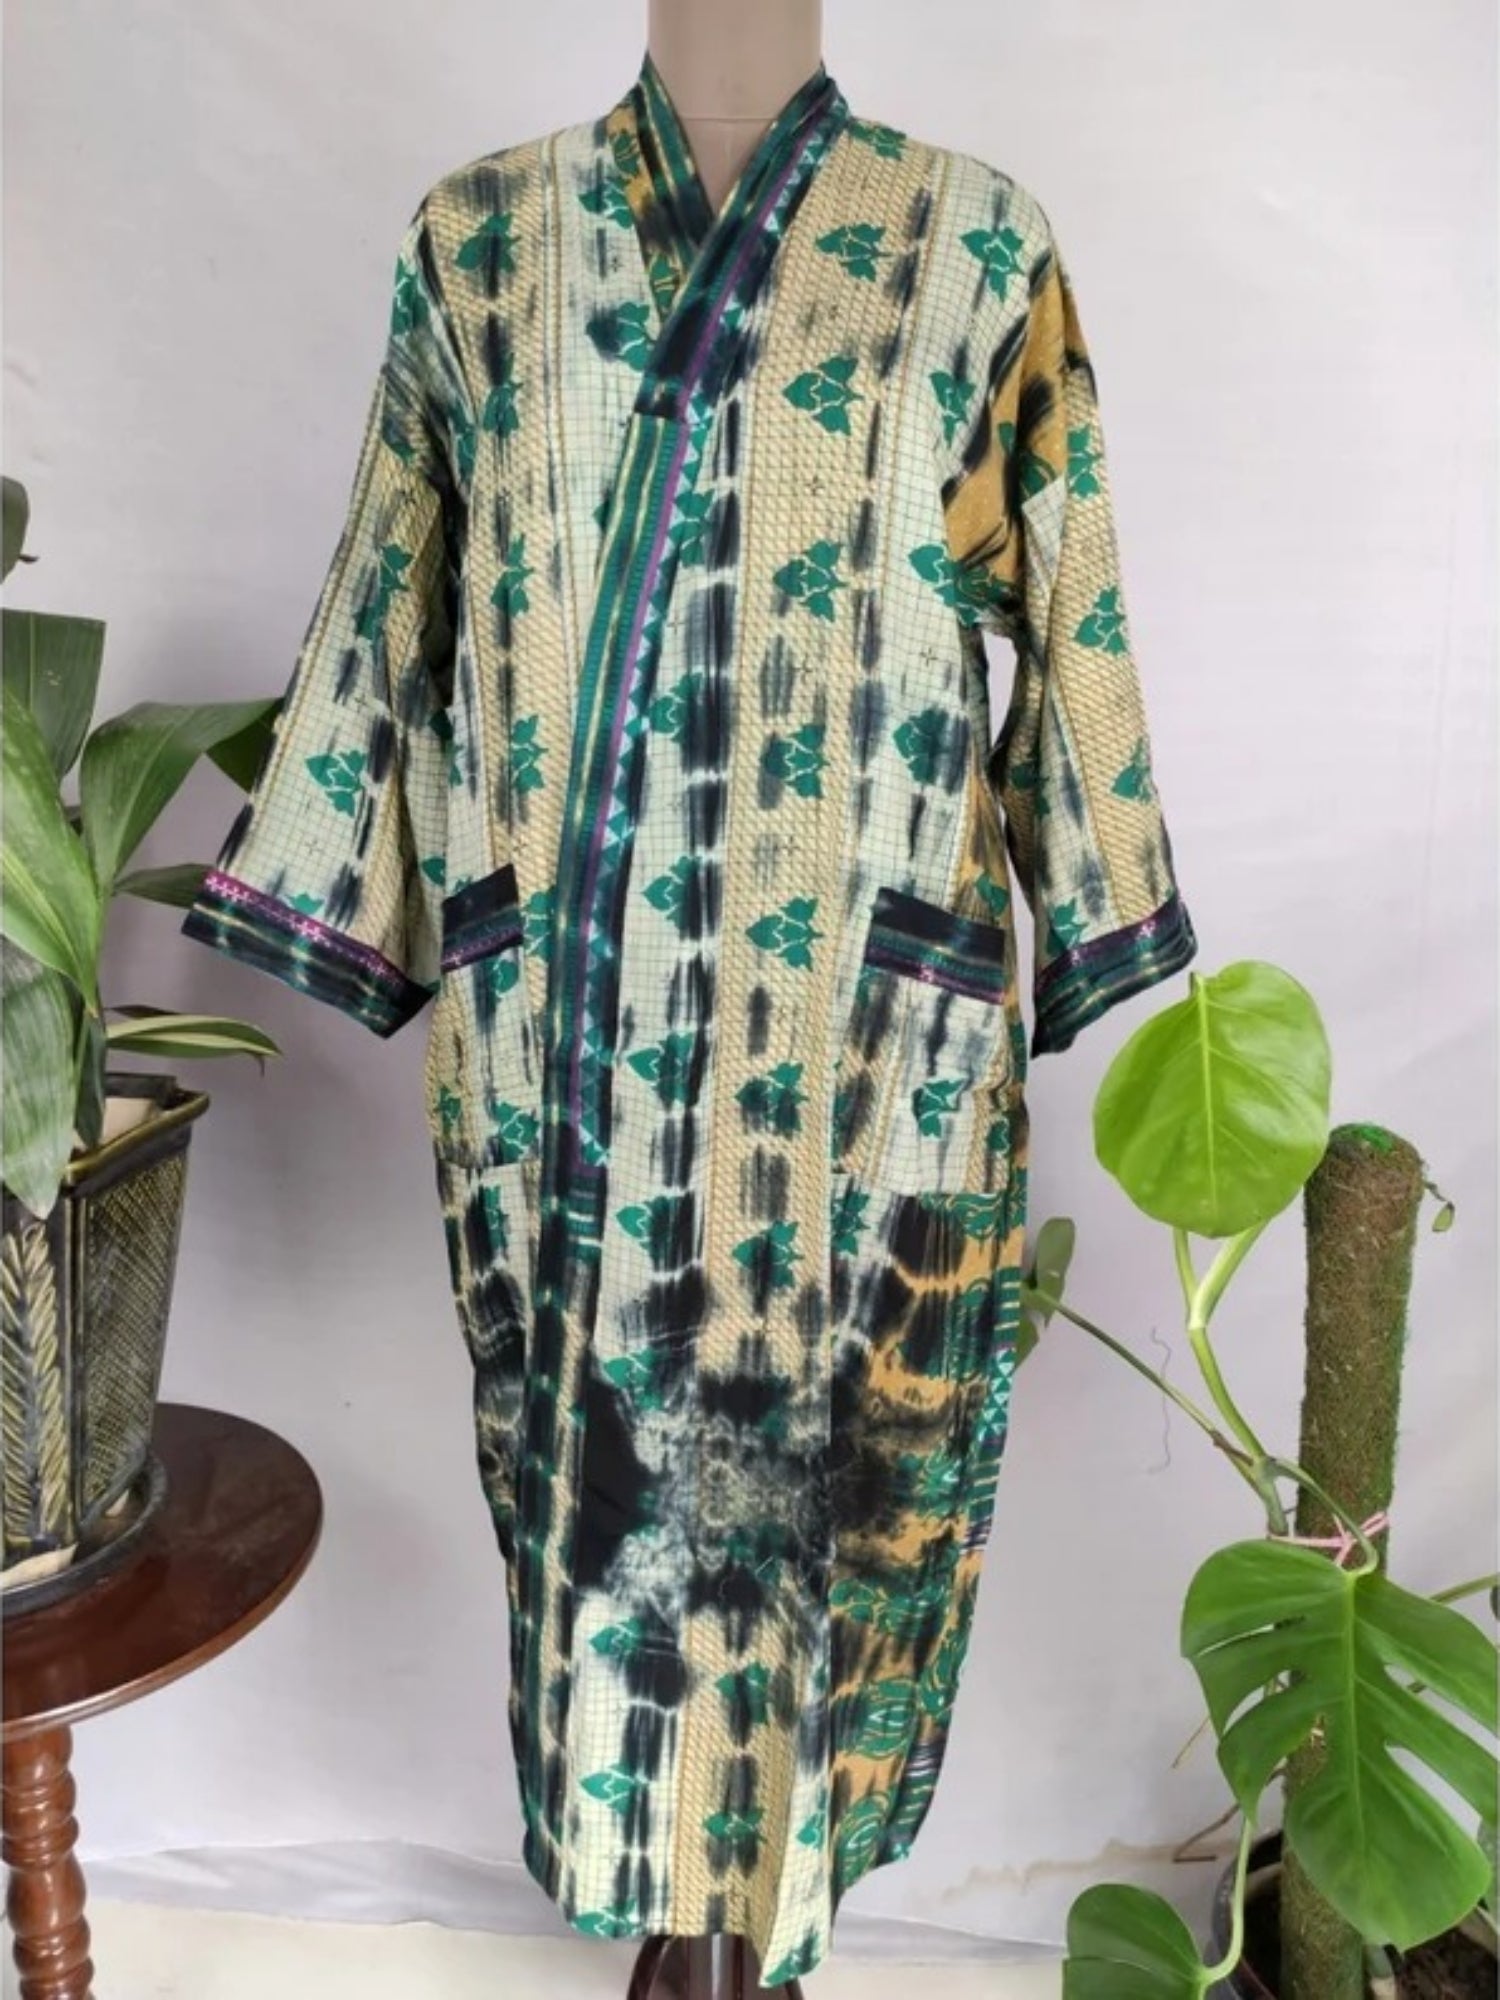 Recycled Pure Cotton Vintage Kimono Open Jacket Boho Summer TieDye House Robe, Beach Coverup | Beige Green Floral Motif Style Print